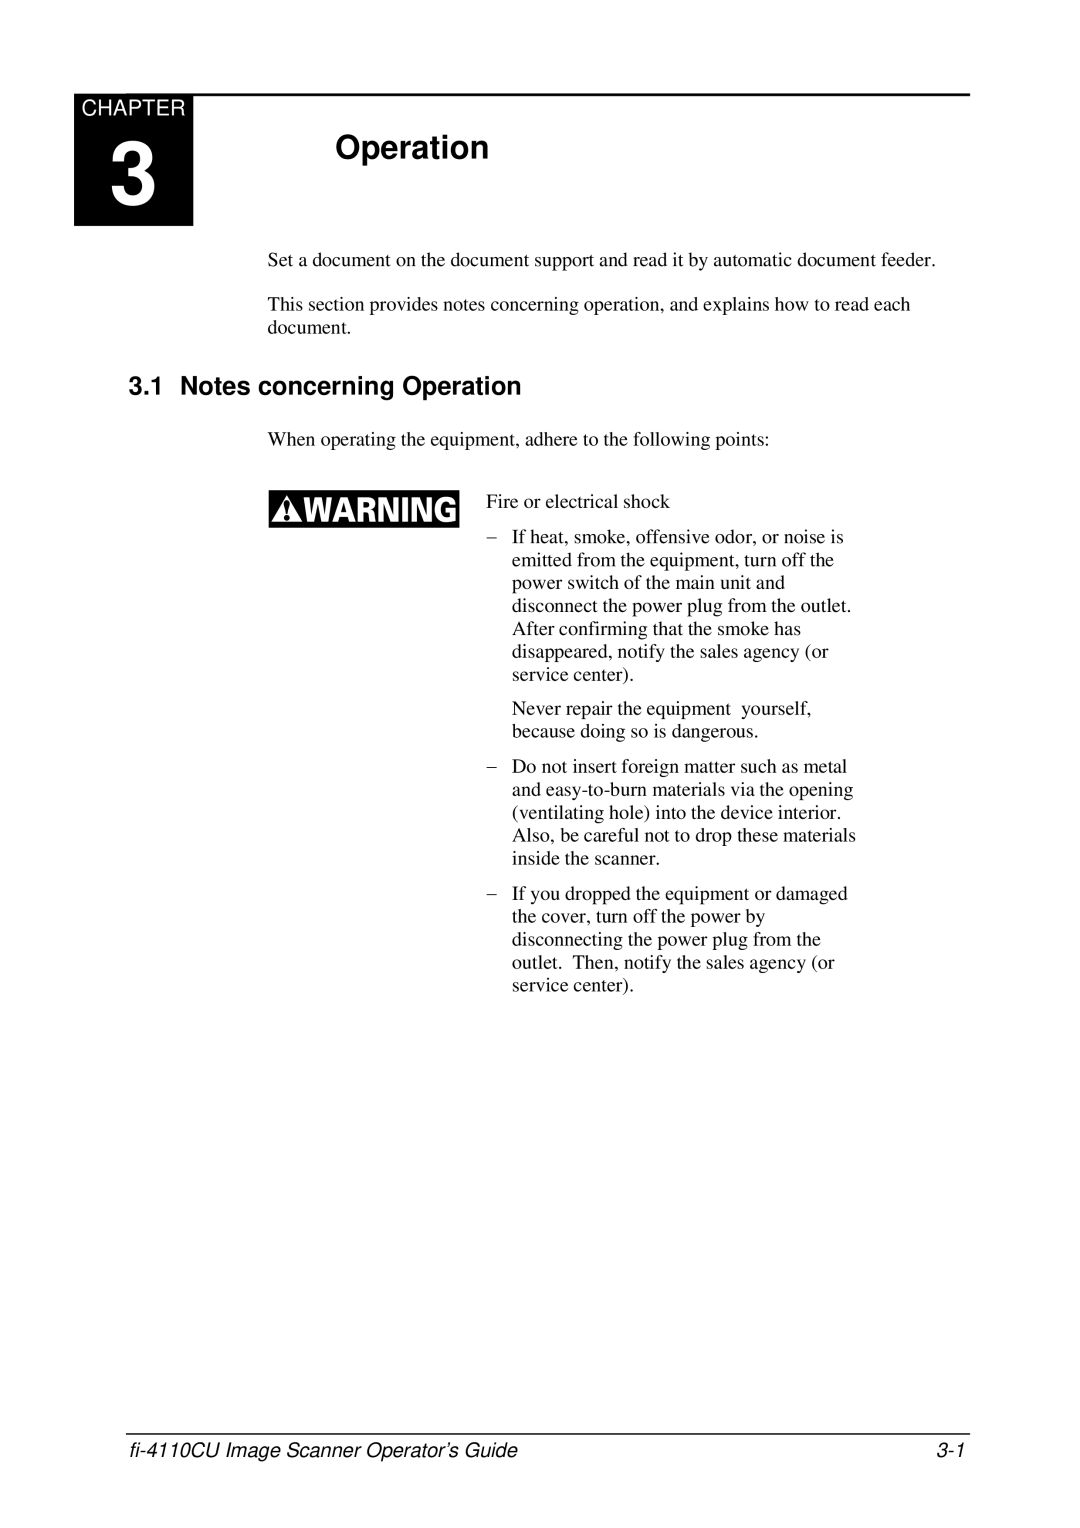 Fujitsu C150-E194-01EN manual Notes concerning Operation, Chapter, fi-4110CU Image Scanner Operator’s Guide 